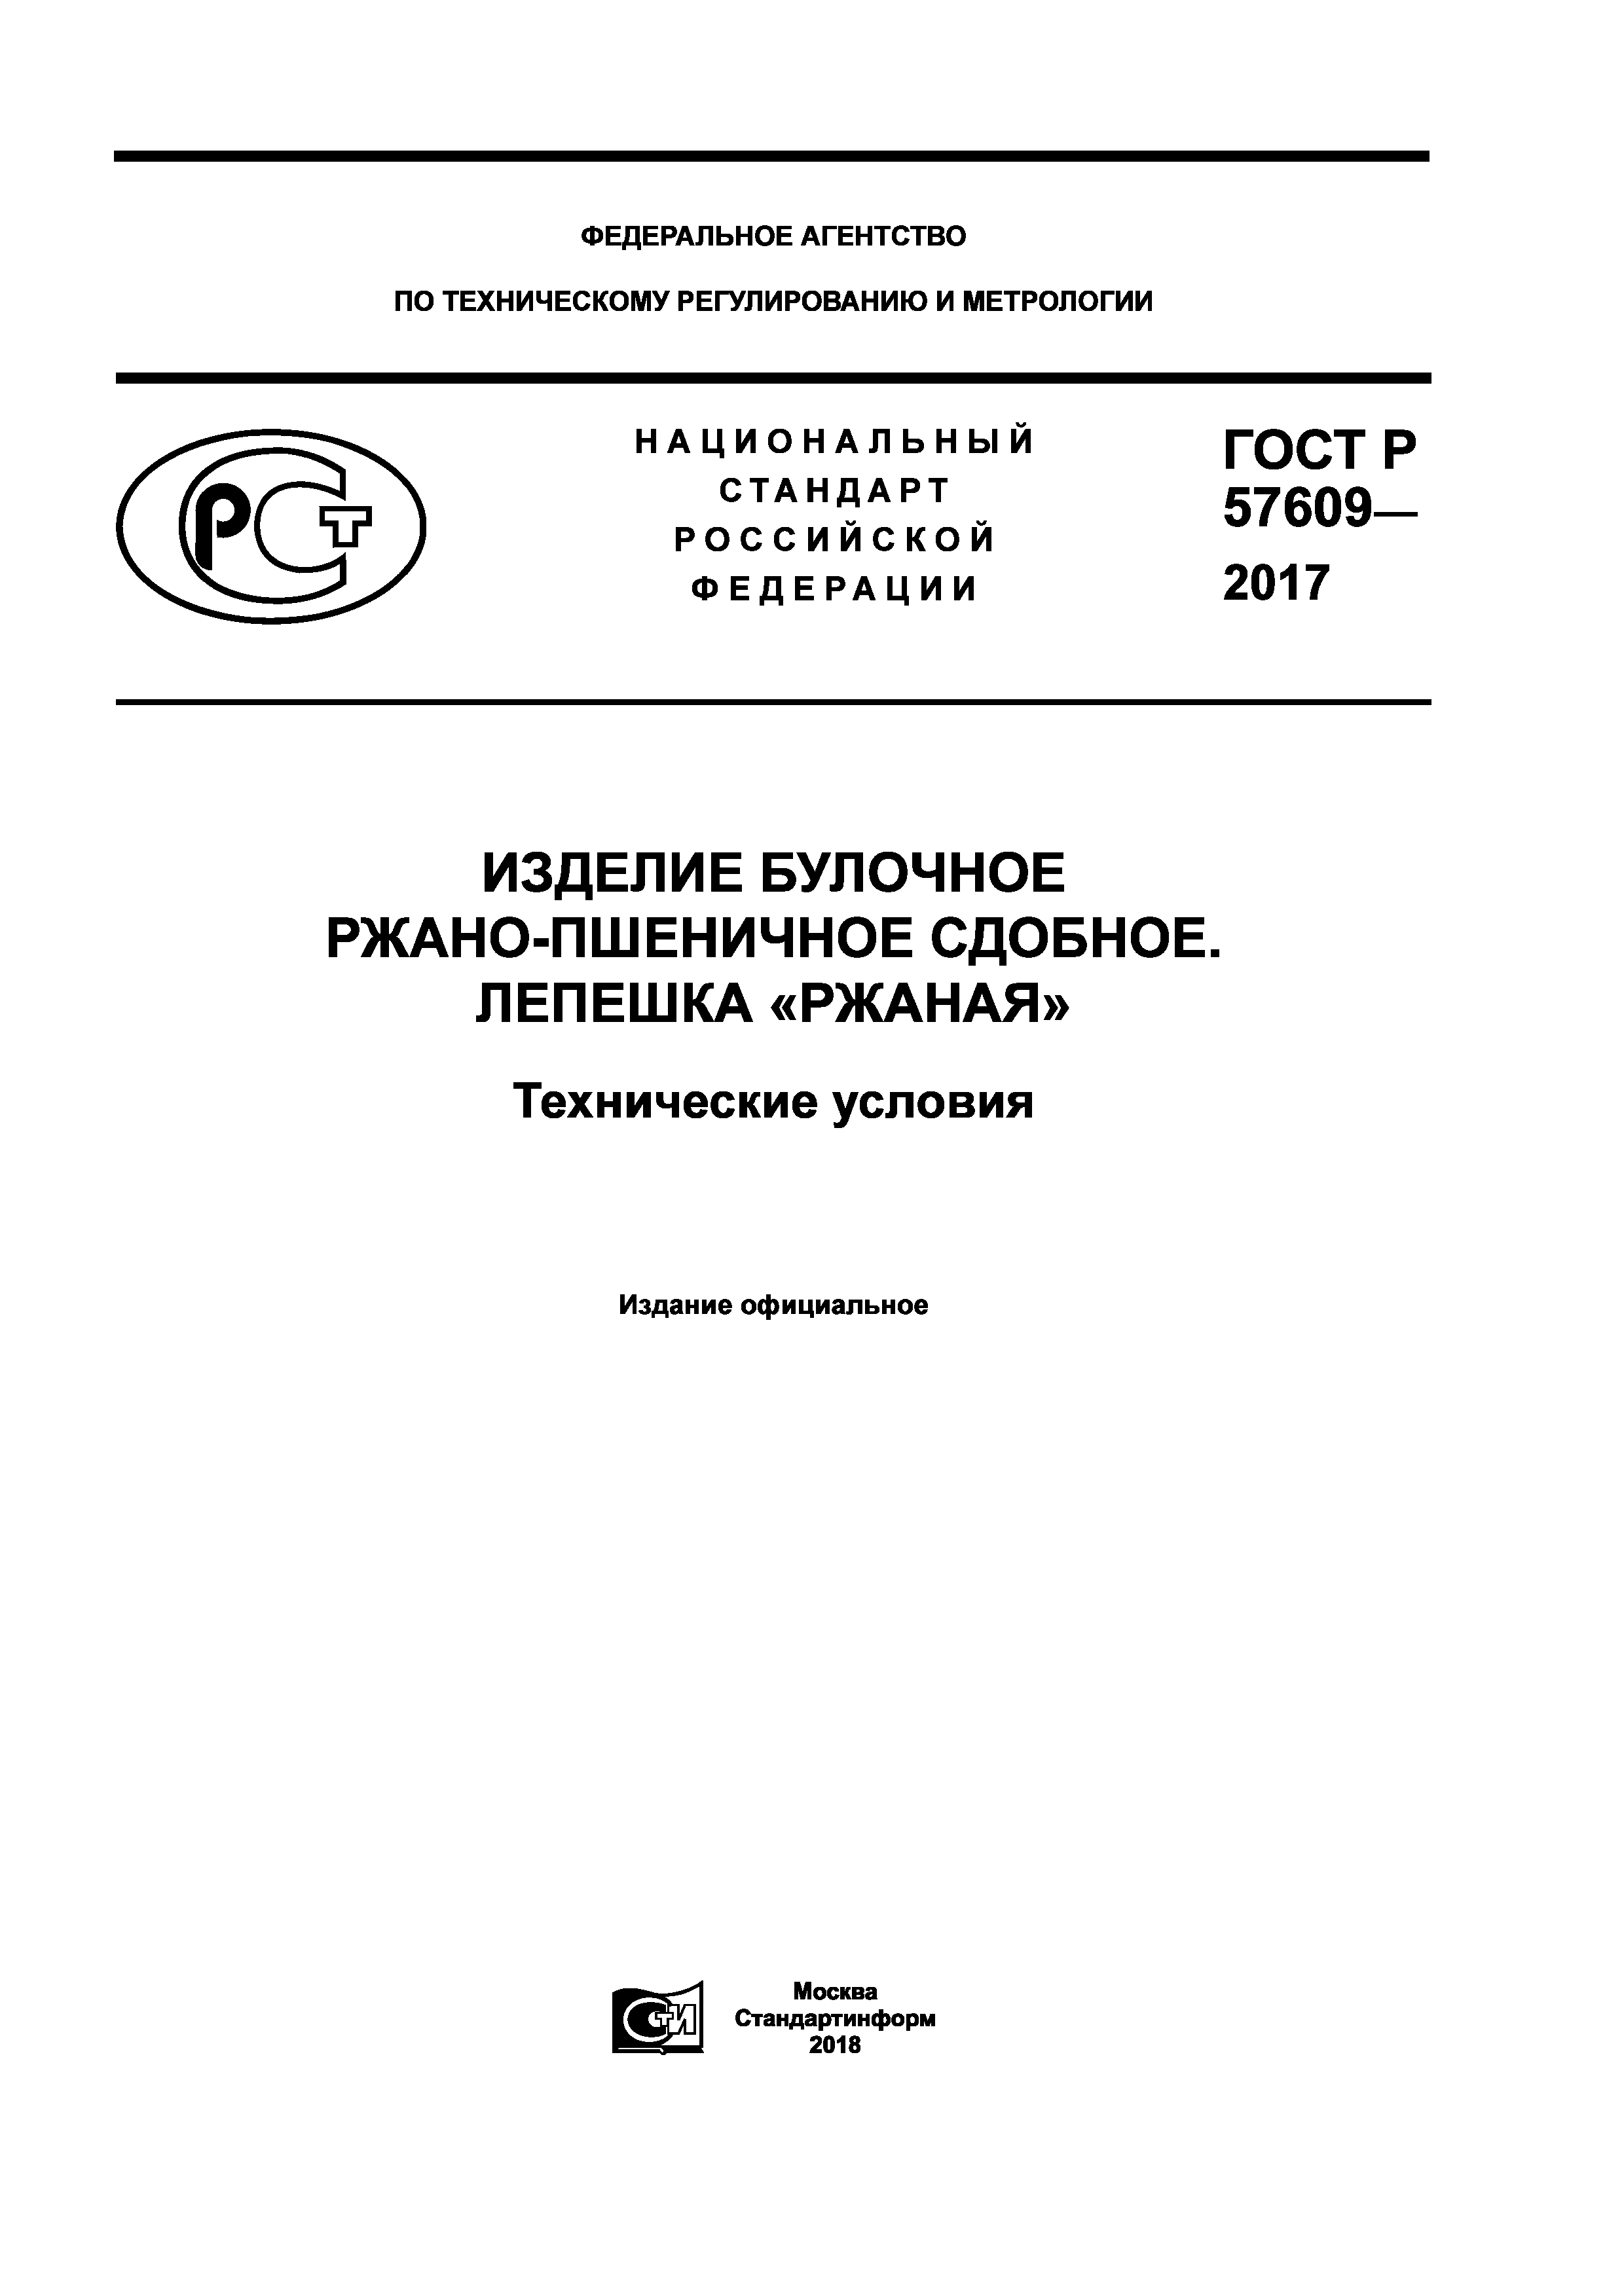 ГОСТ Р 57609-2017